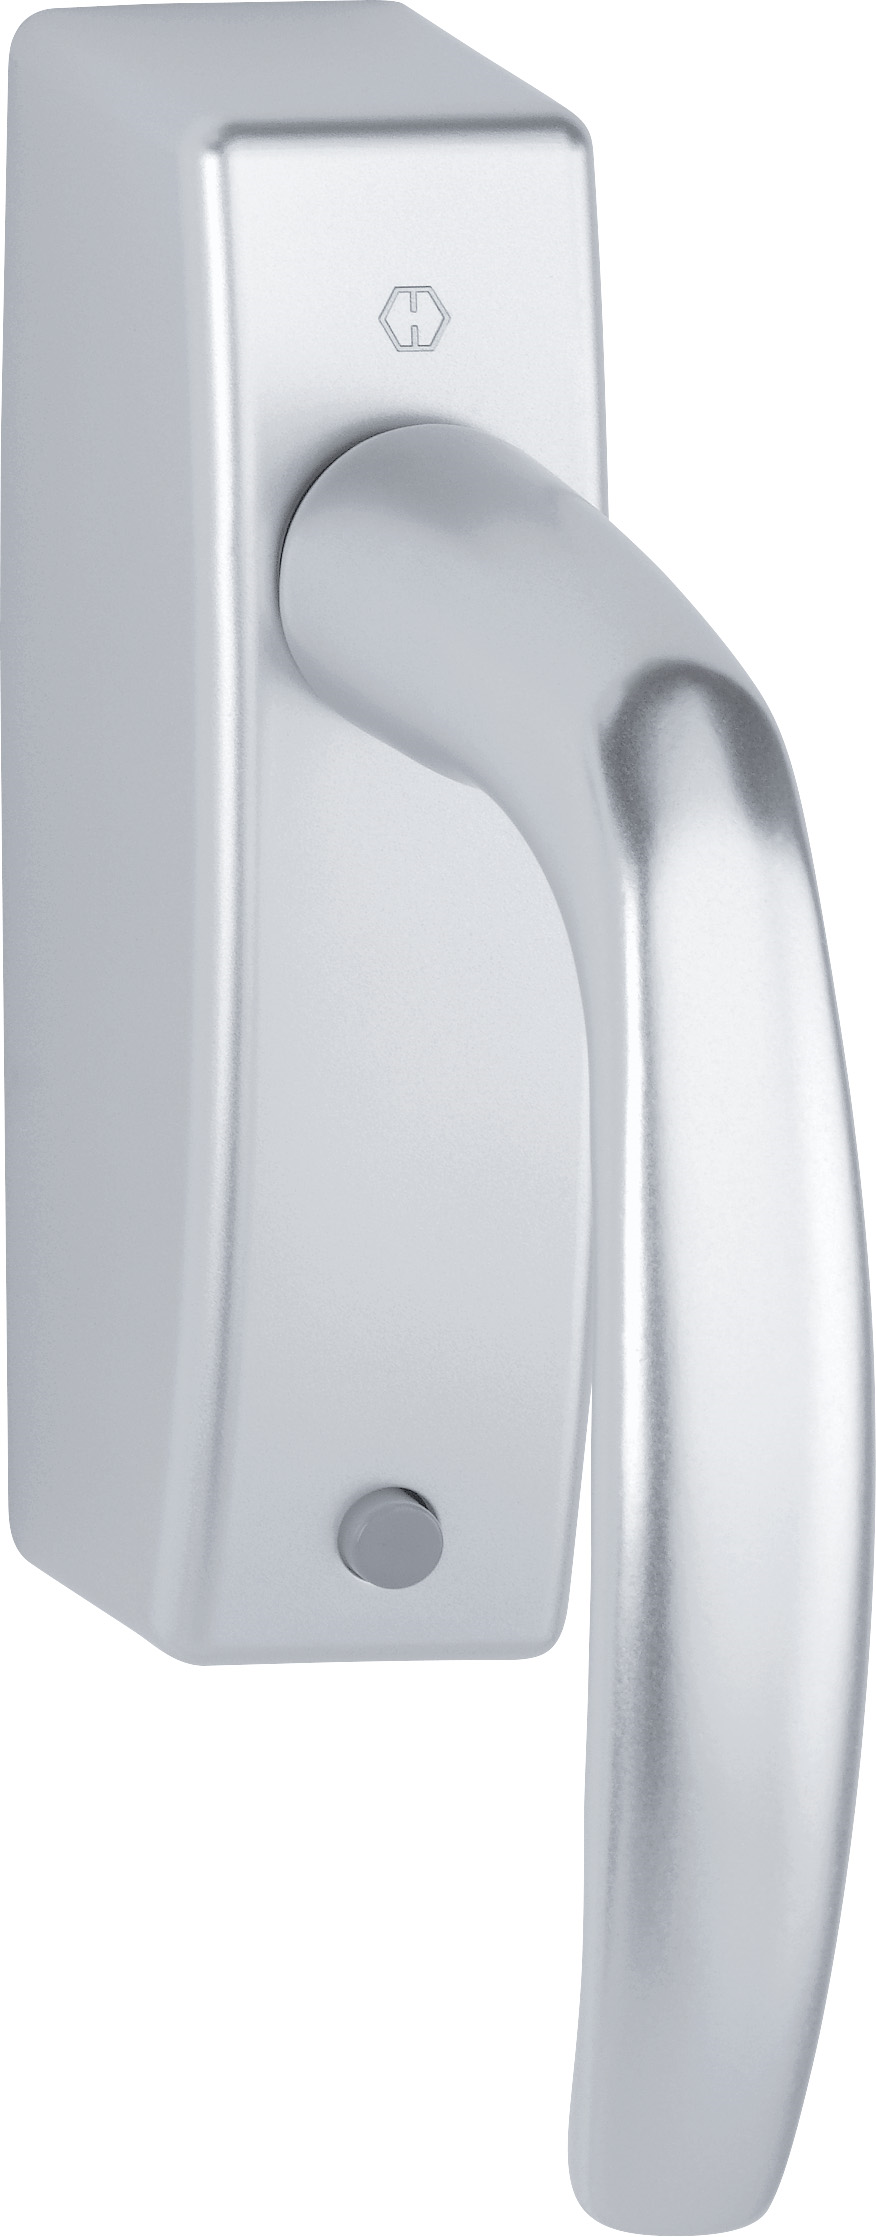 AutoLock eWindow handgreep Atlanta aluminium zilver, 28 mm pin, bidirectioneel